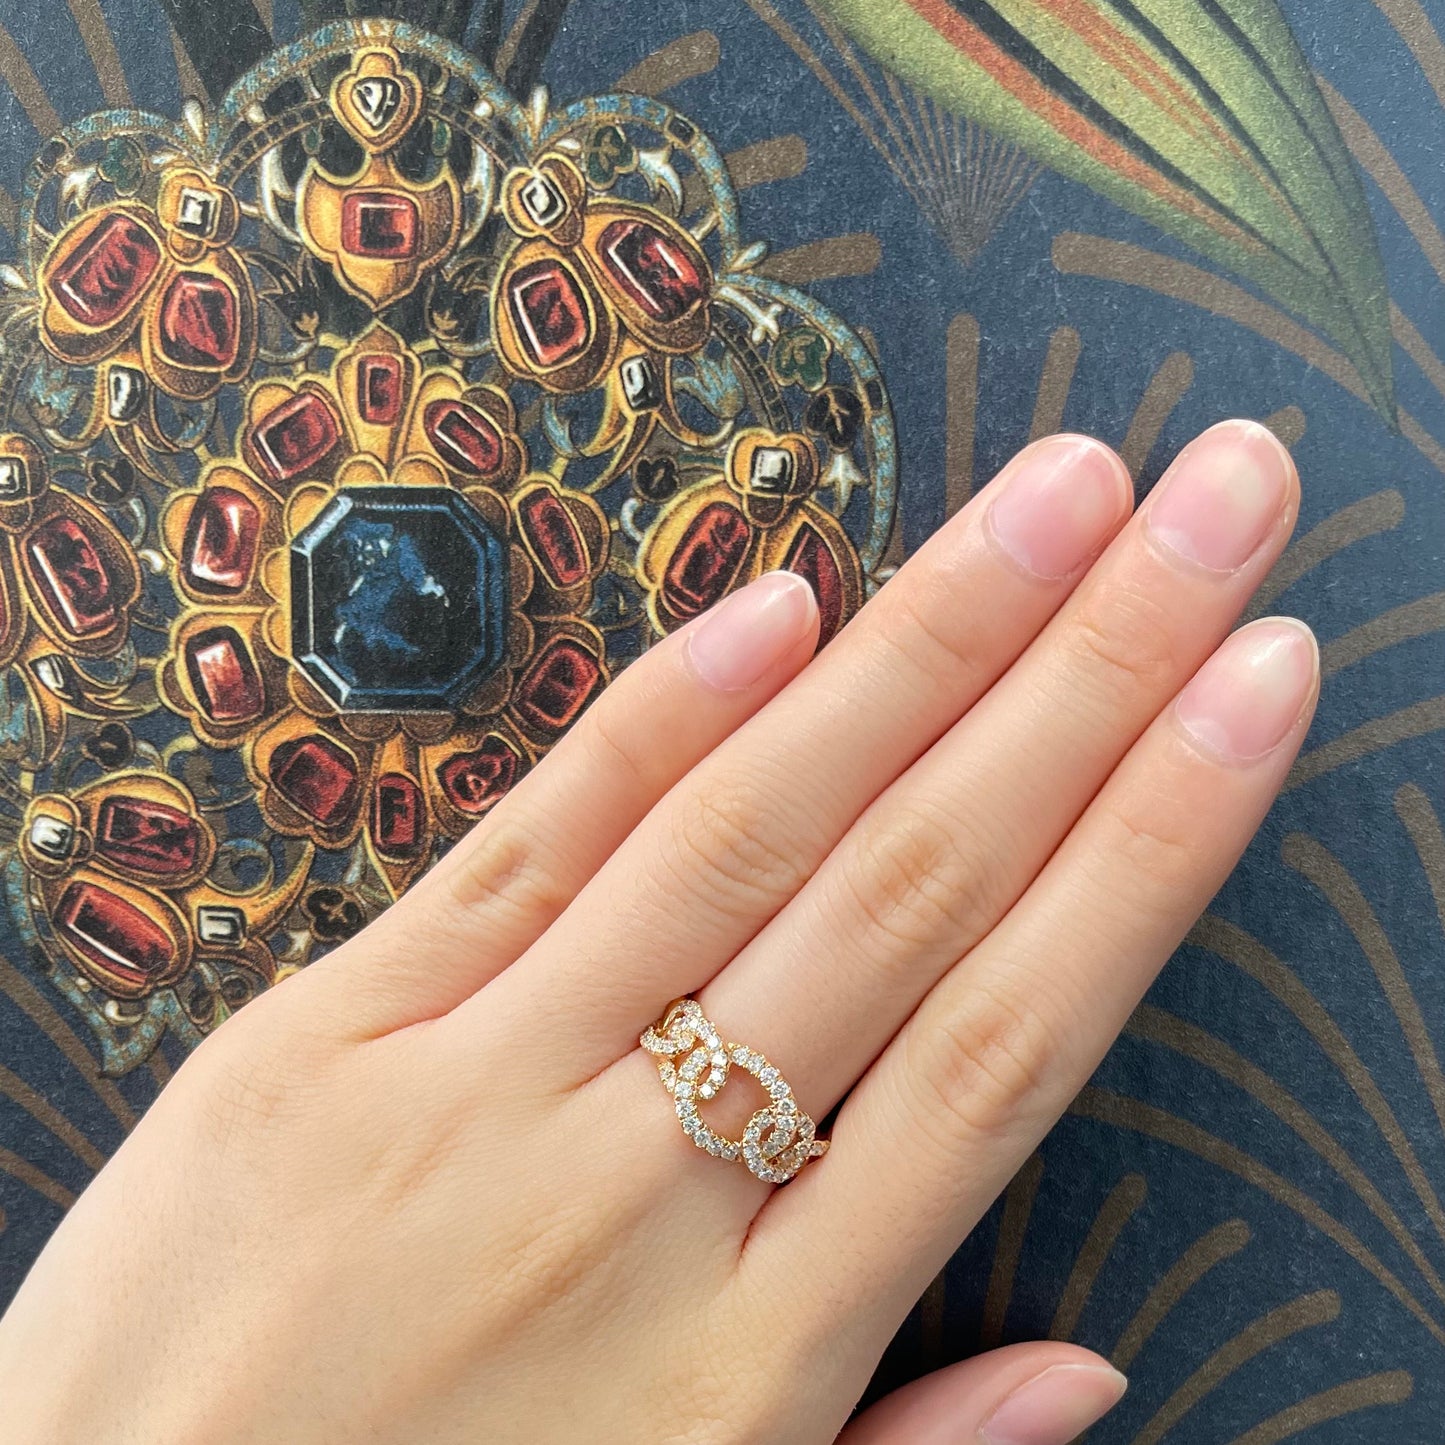 18k玫瑰金鑽石戒指在中指上  18k Rose Gold Chain Diamond Ring on middle finger